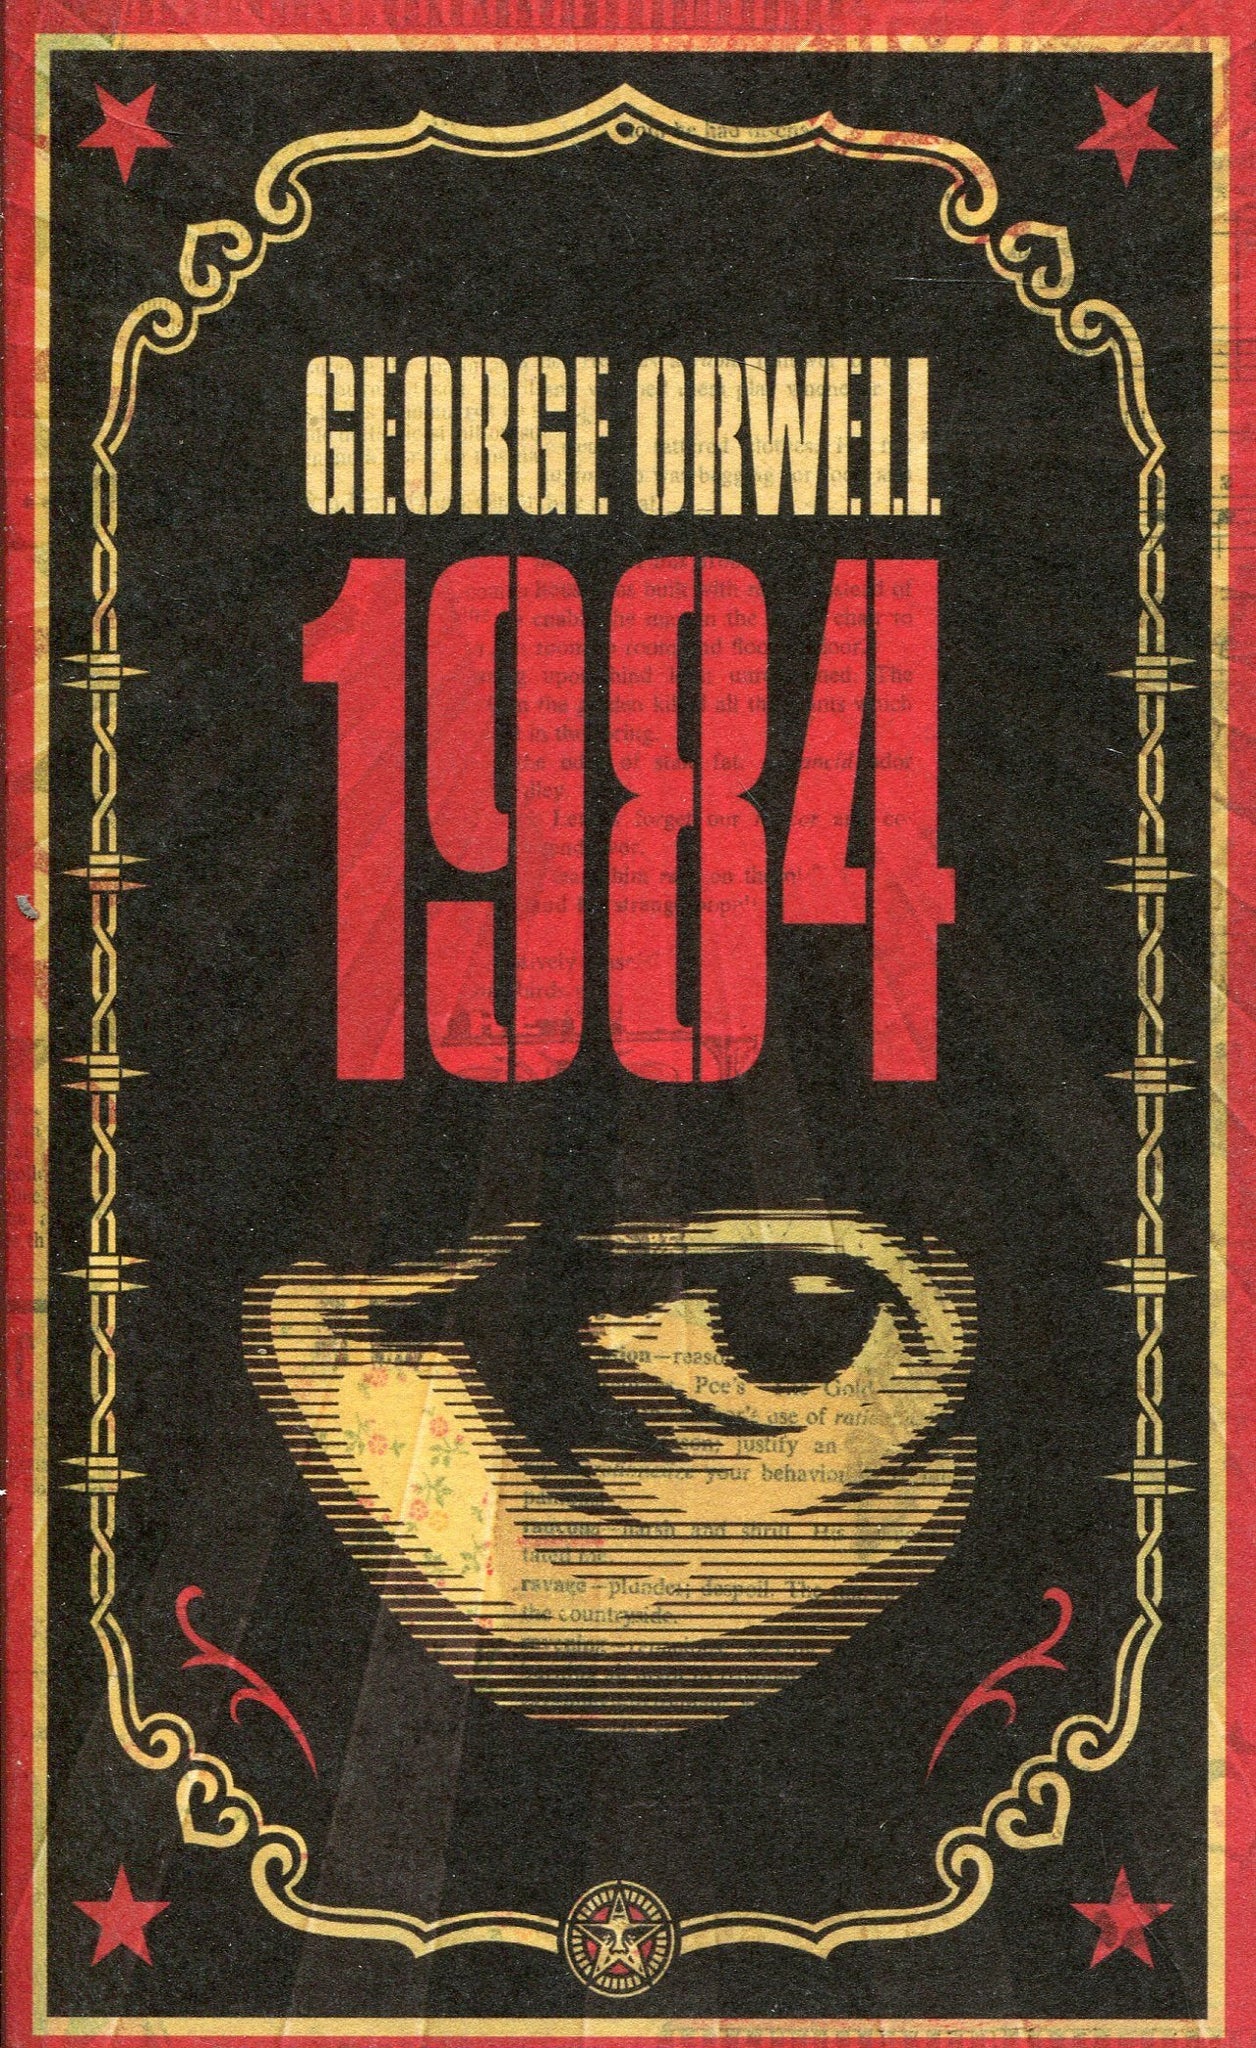 1984 por George Orwell